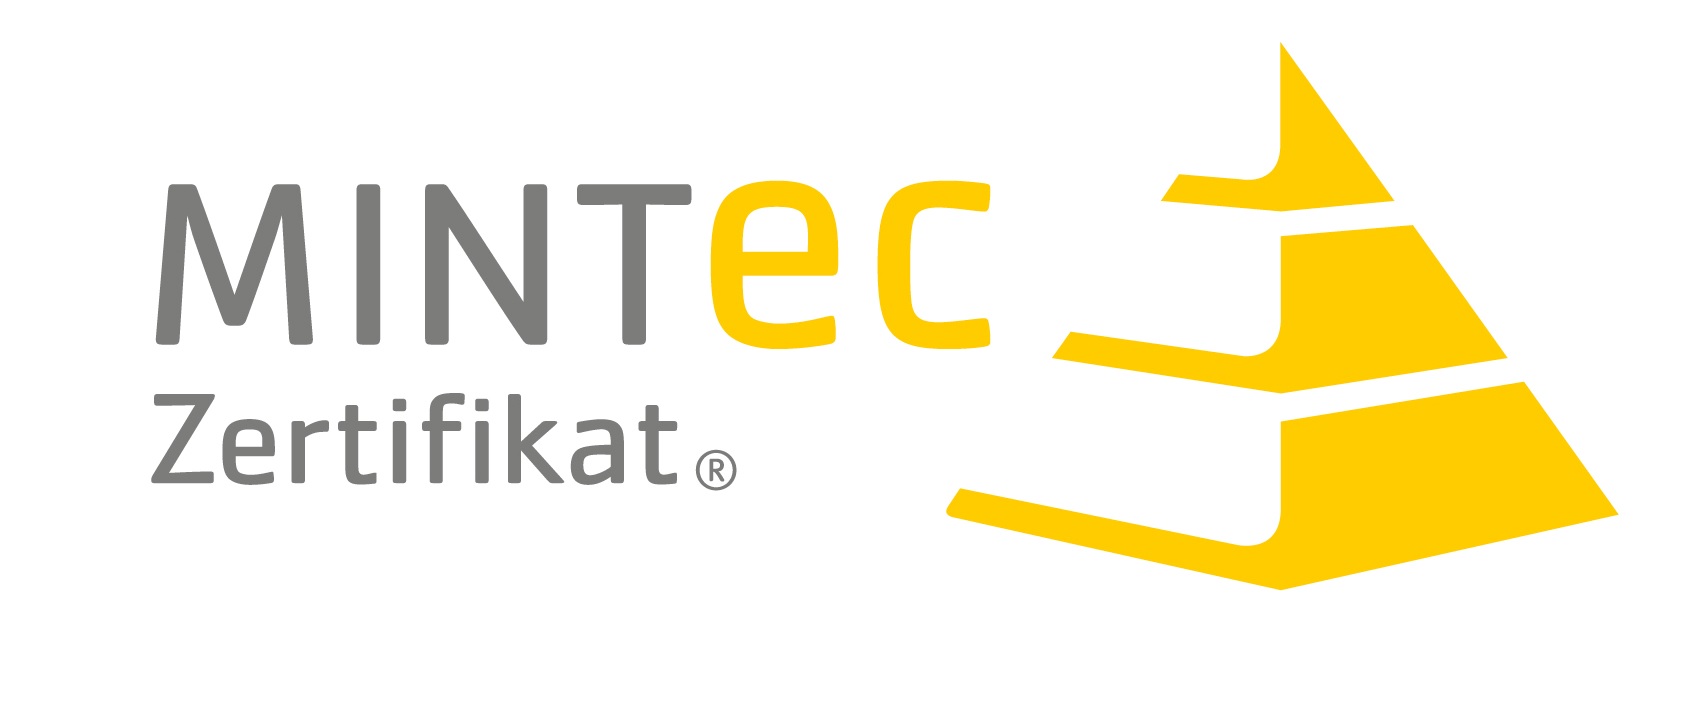 MINT-EC Logo Zertifikat